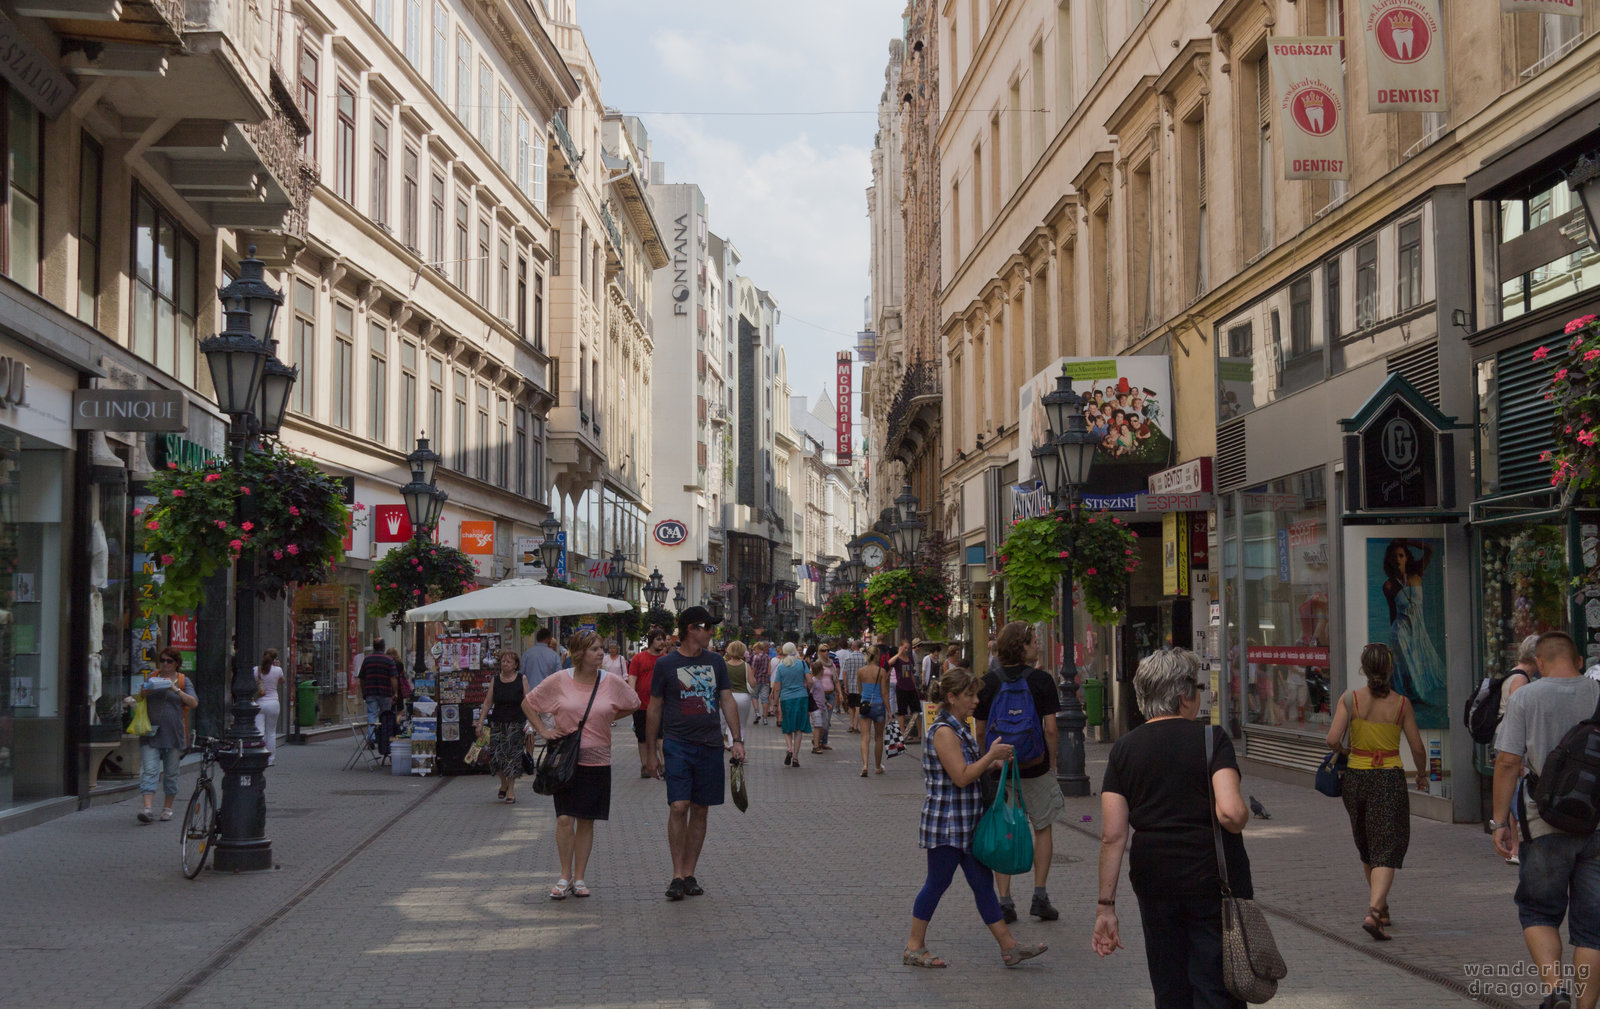 Tourist-oriented street -- building, people, street